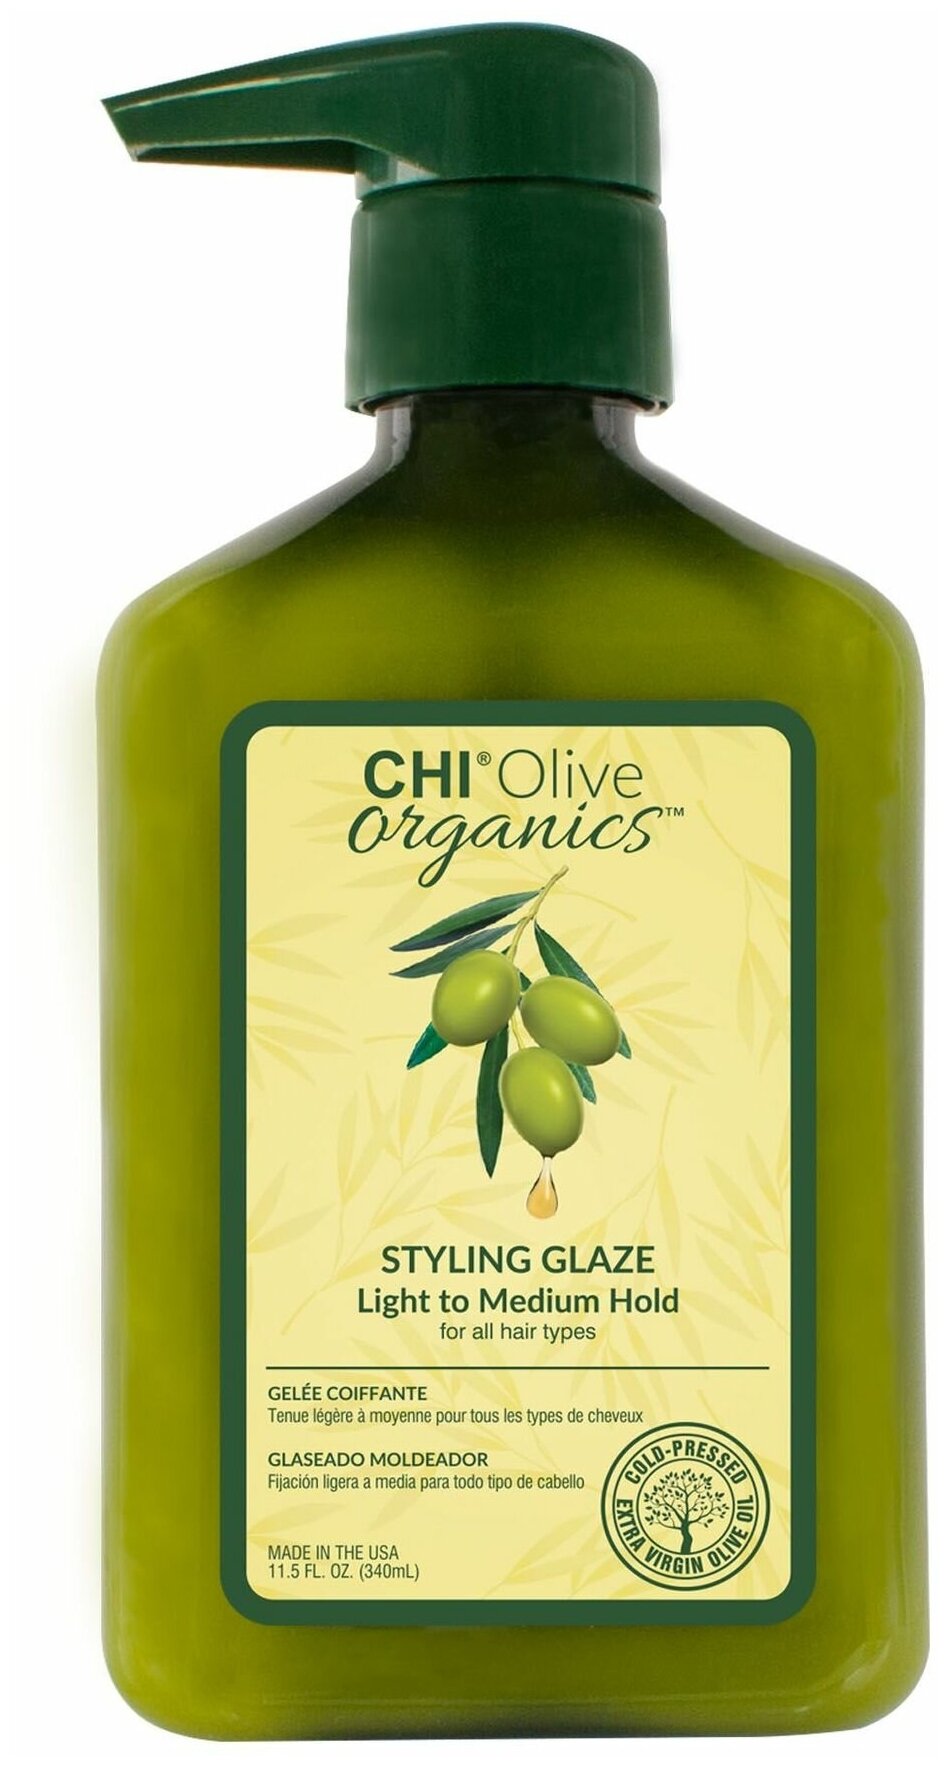 CHI Olive Organics гель-стайлинг Styling Glaze, средняя фиксация, 340 мл